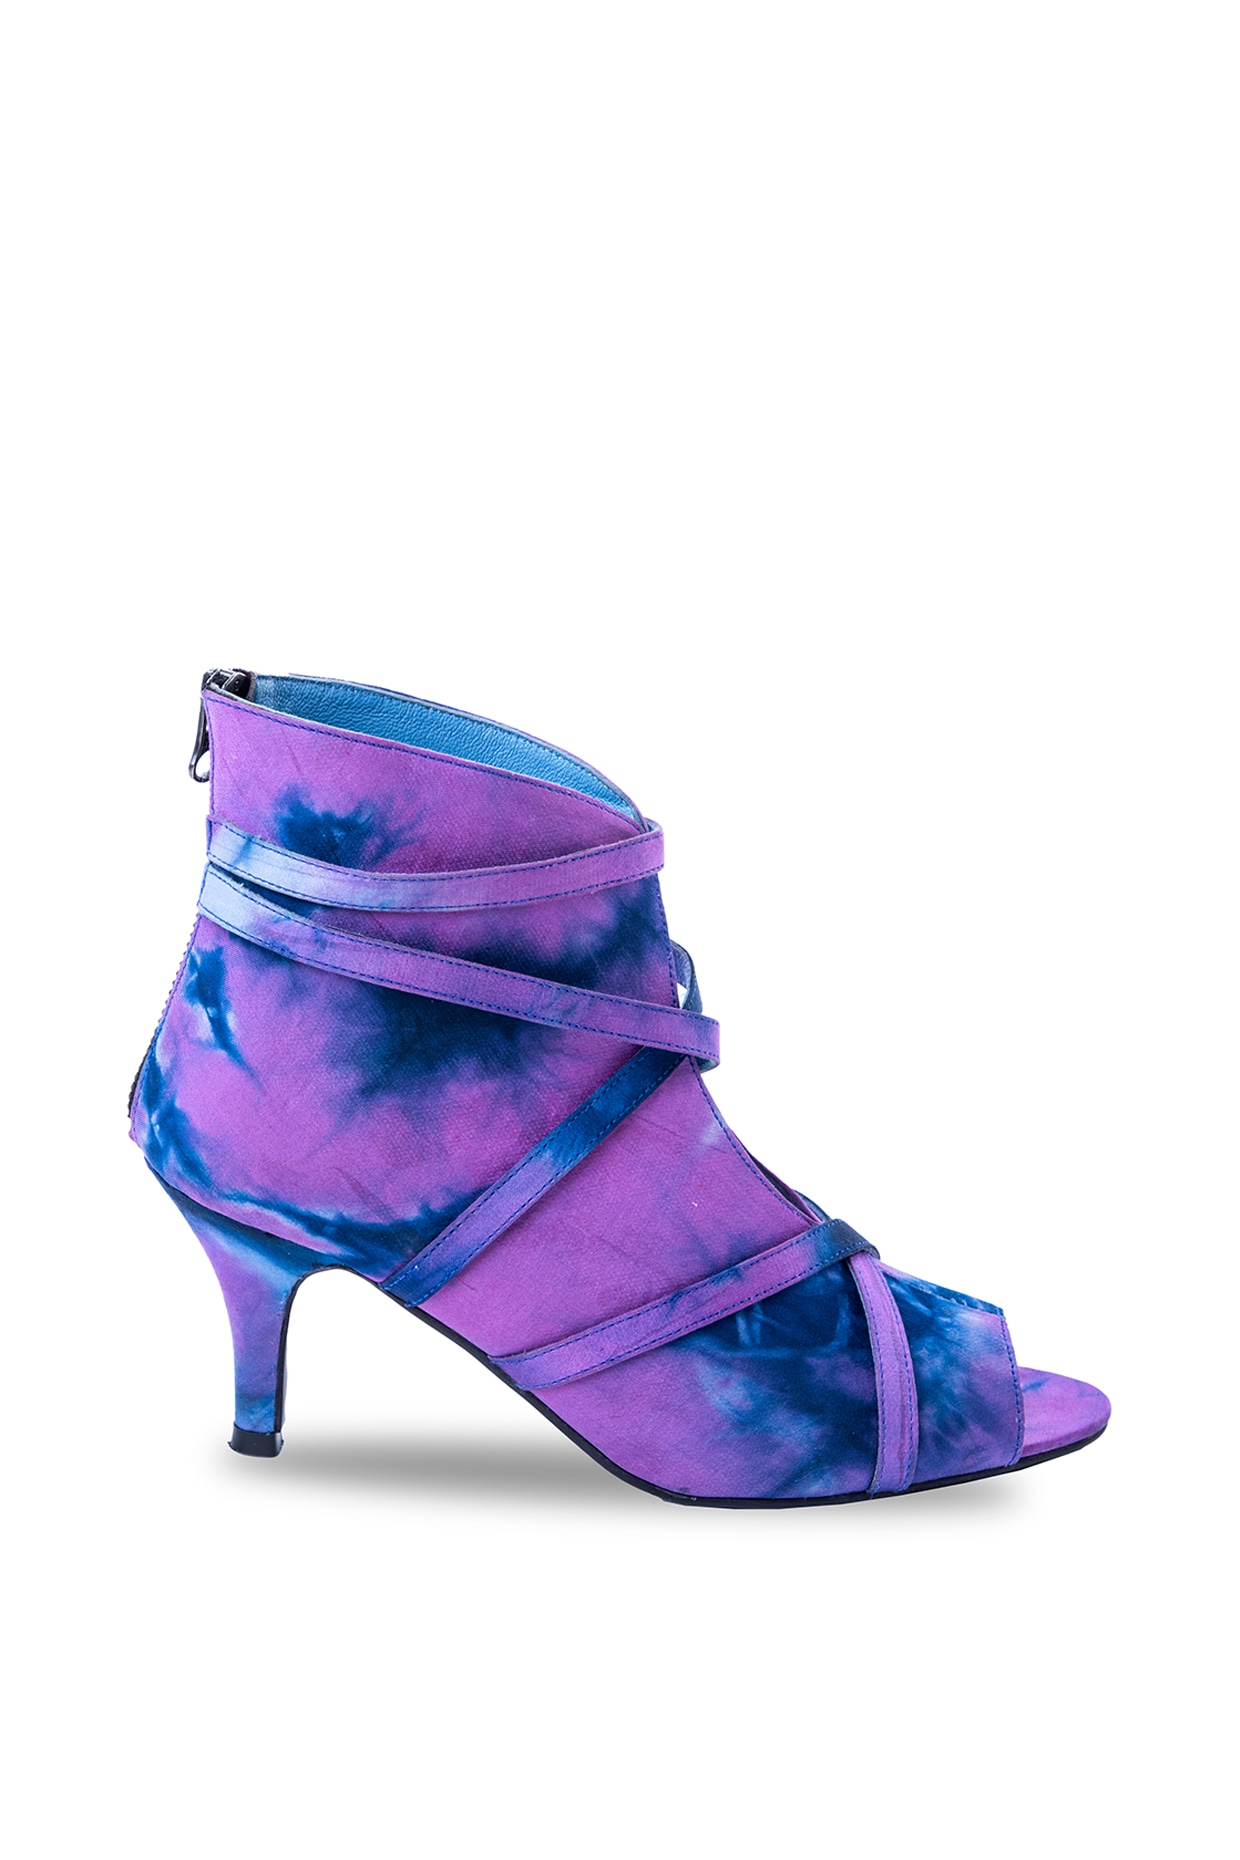 Sorbern Purple Metallic Women Sandals Blue High Heels With Ankle Straps  Open Toe Platform Shoes Custom Color